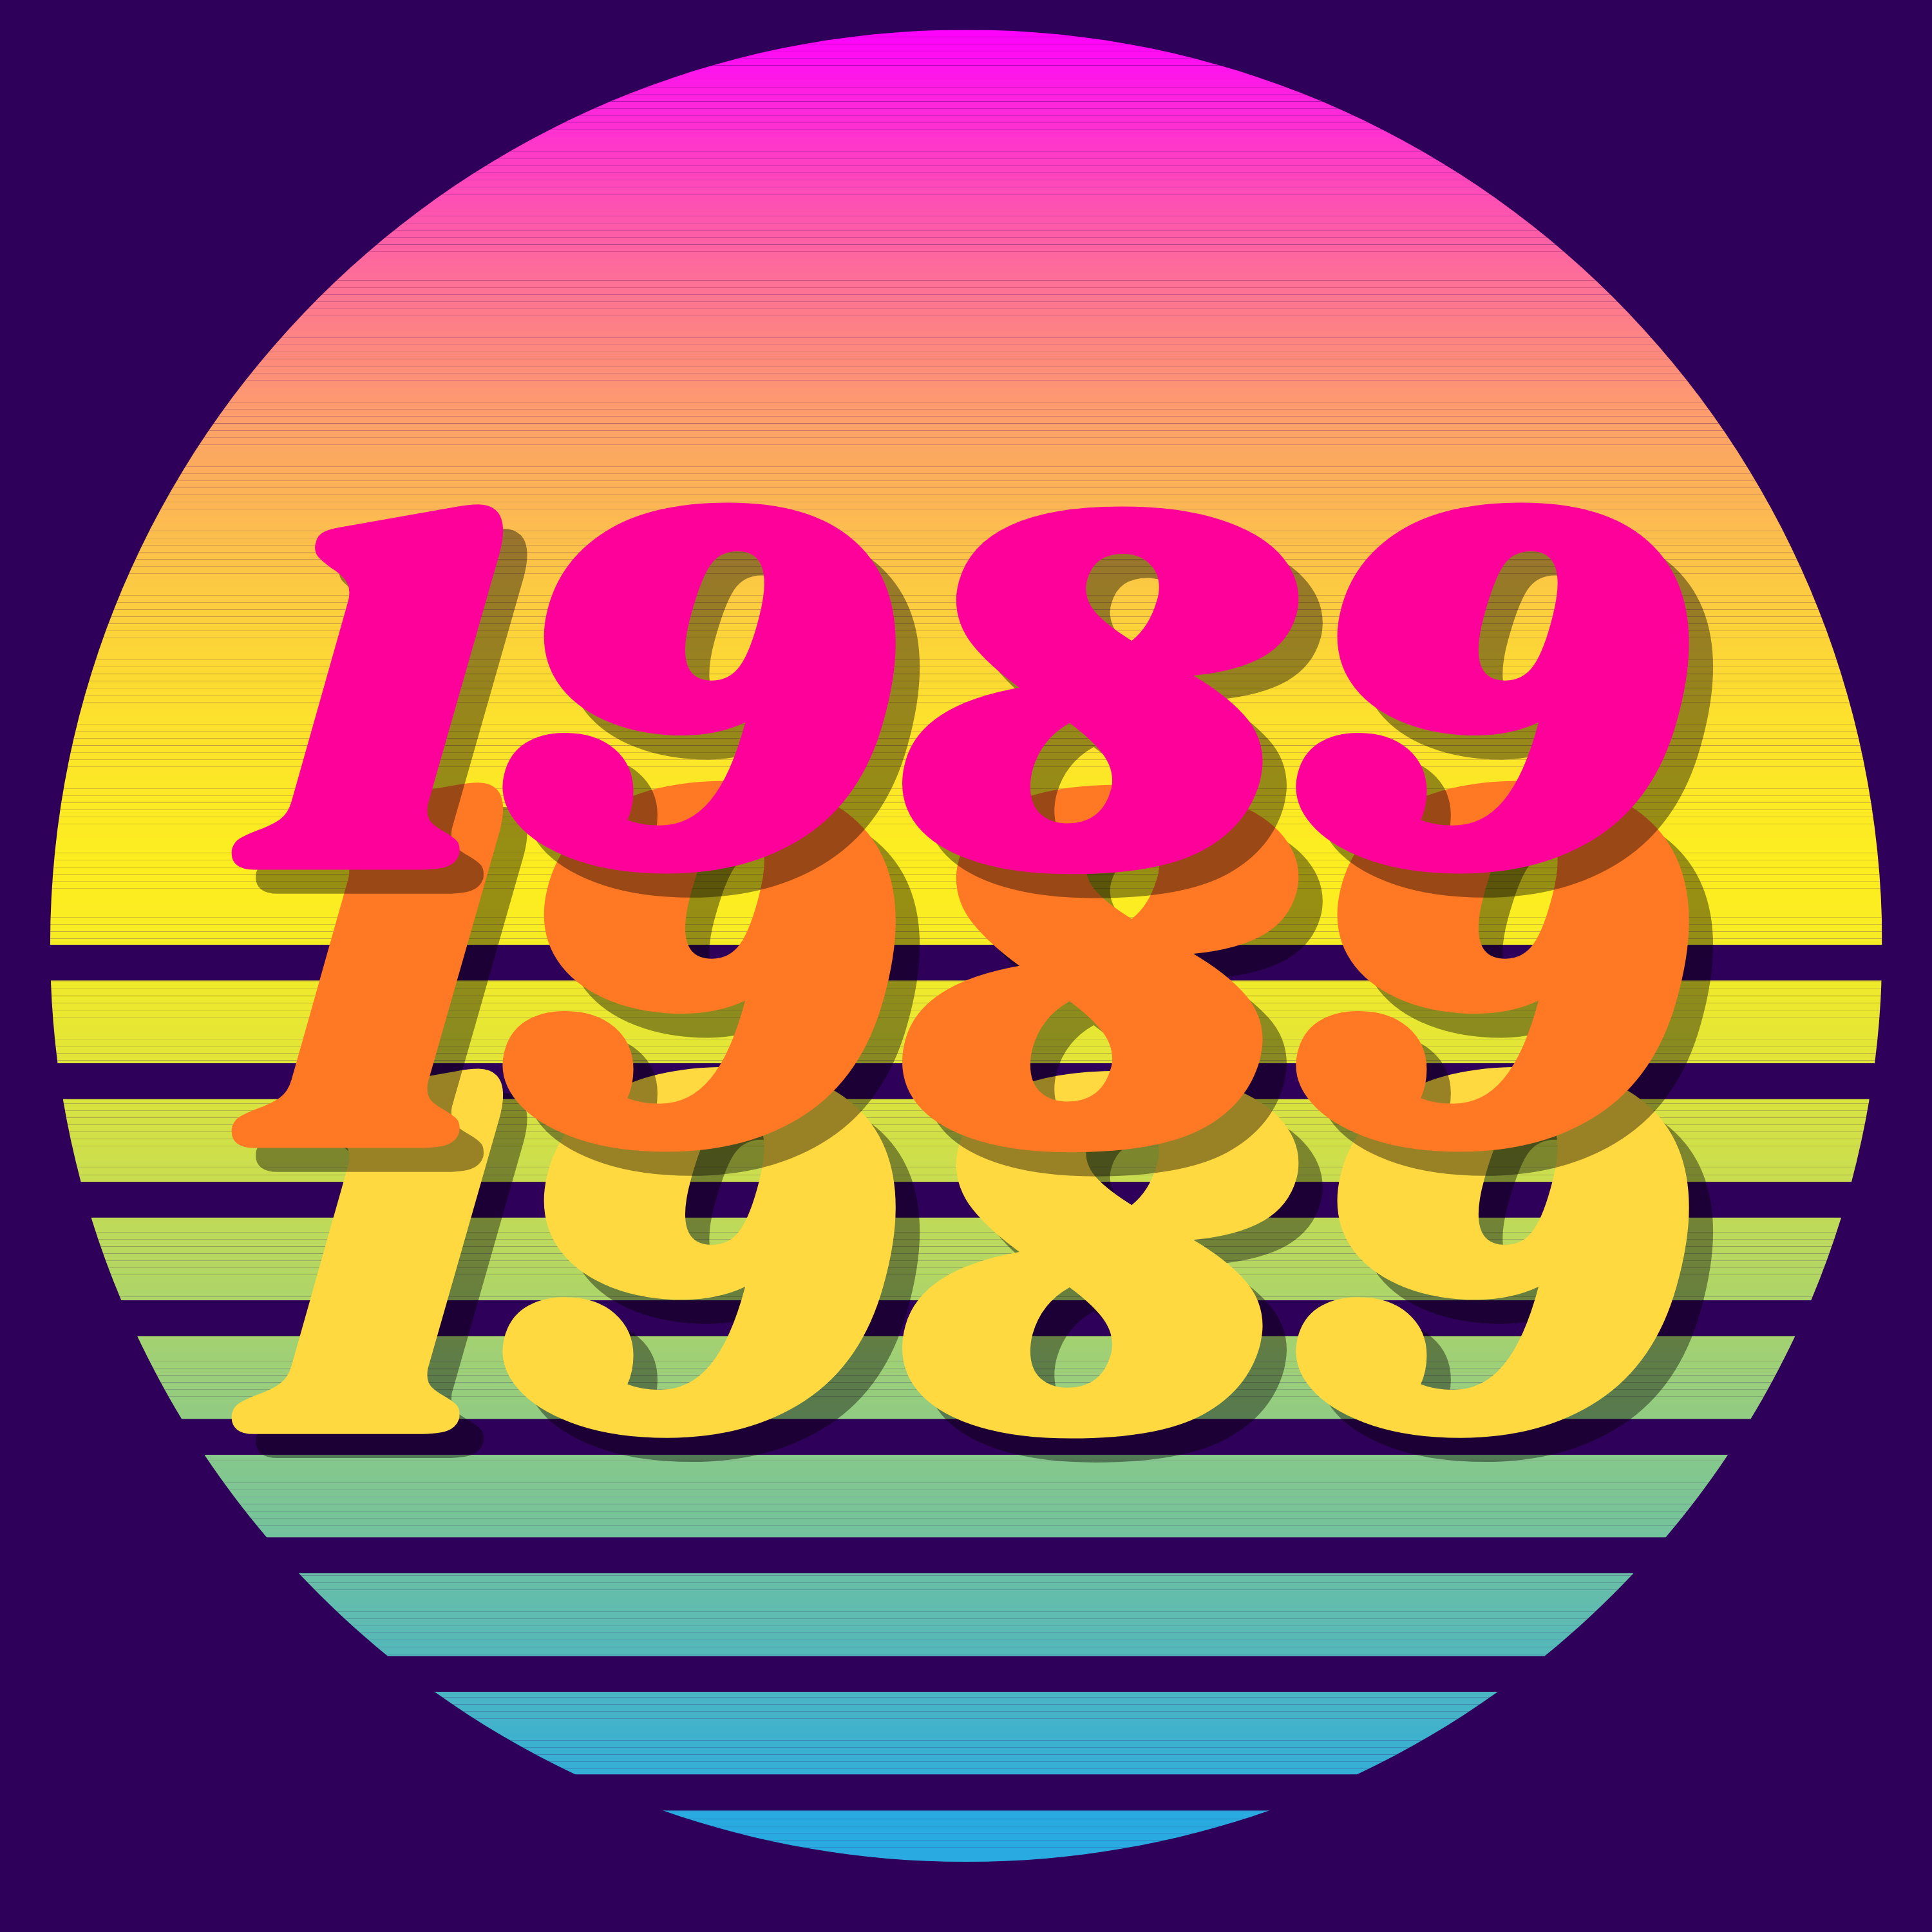 1989 Podcast logotyp